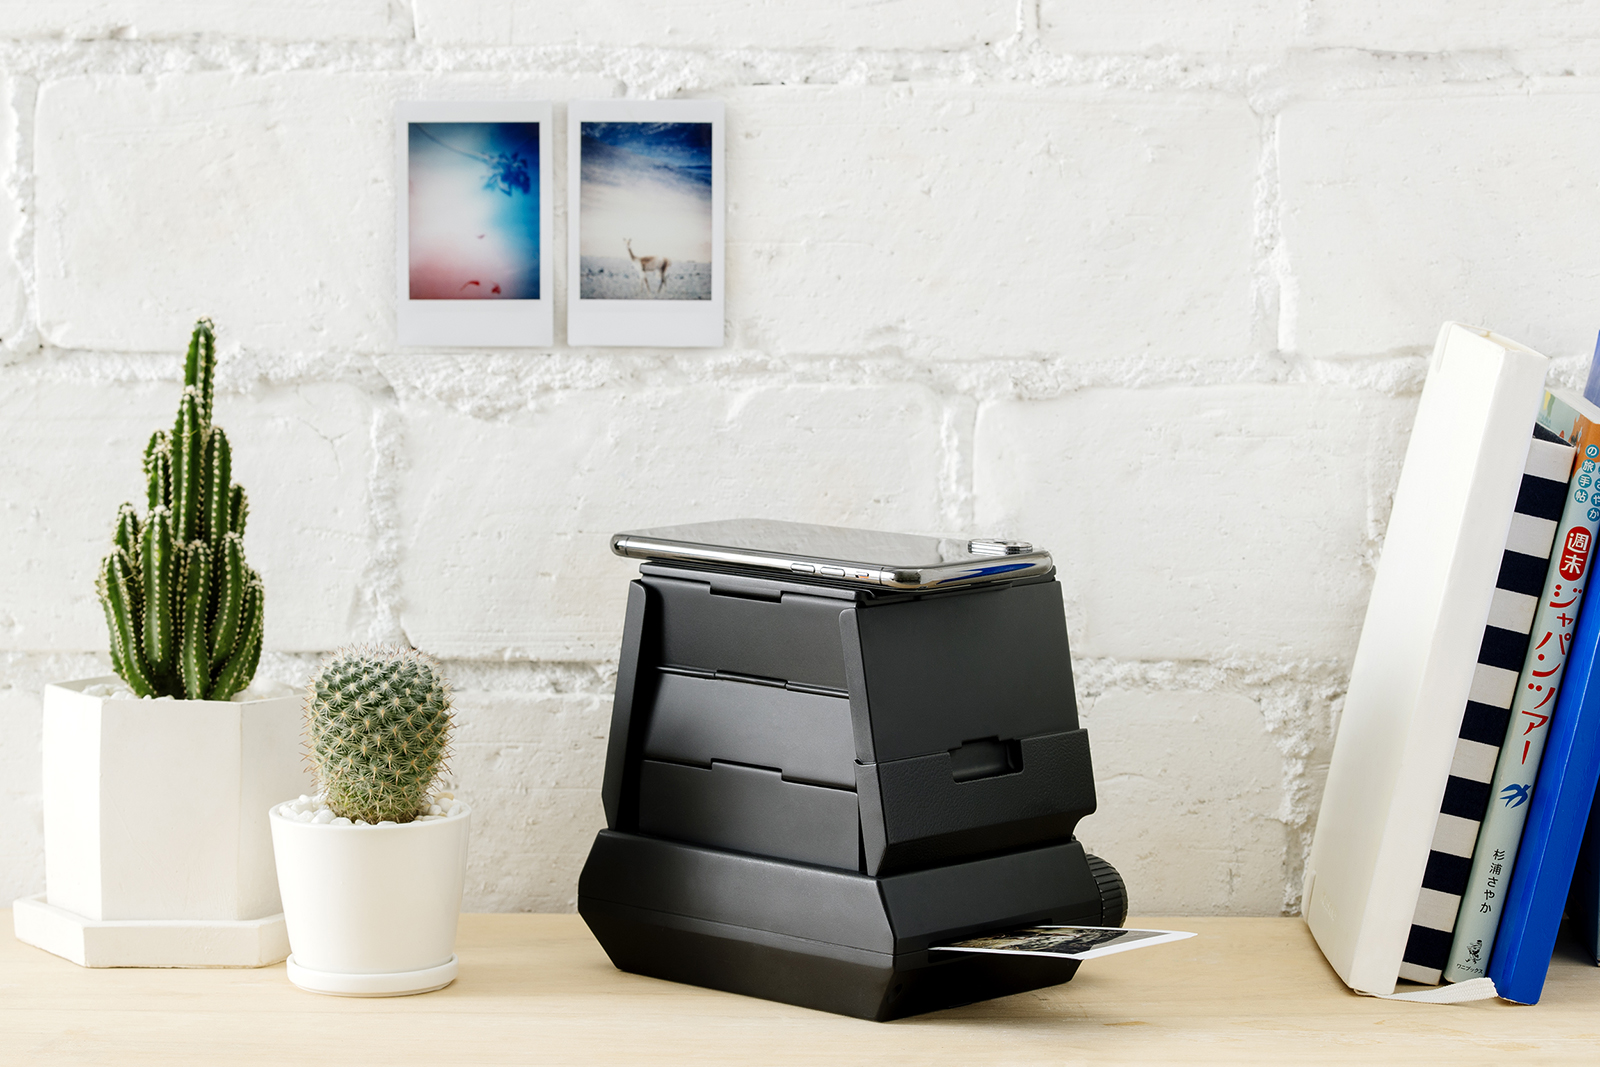 holga printer kickstarter lifestyle 6 07181658